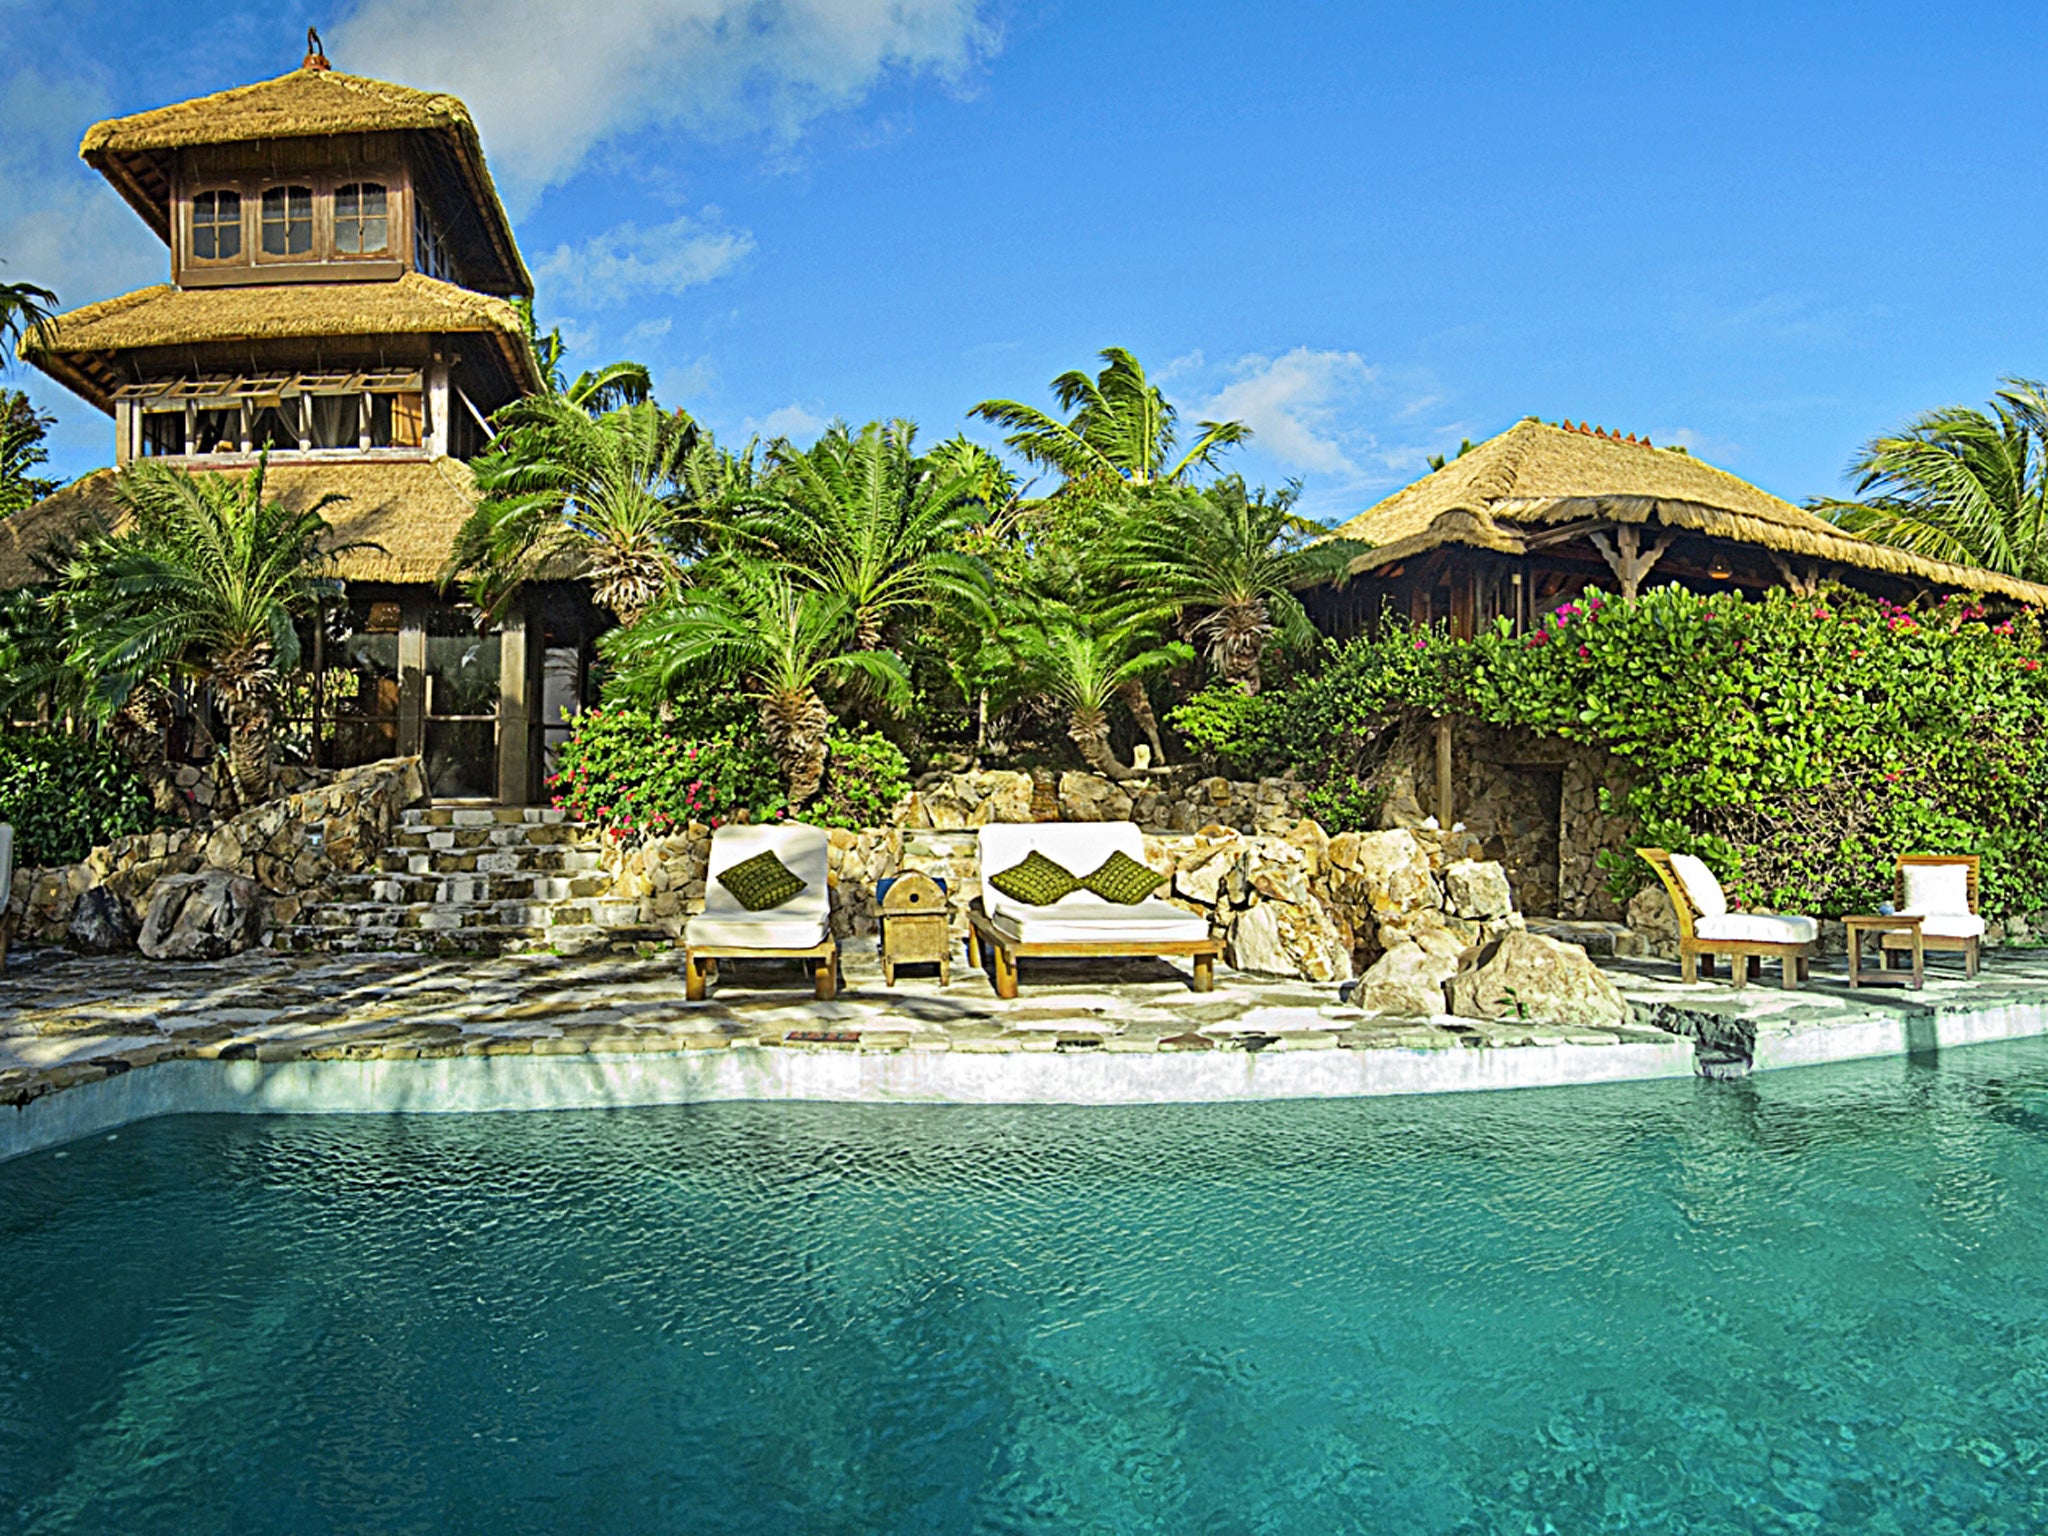 Splash out: Richard Branson's luxury Caribbean retreat, Necker Island